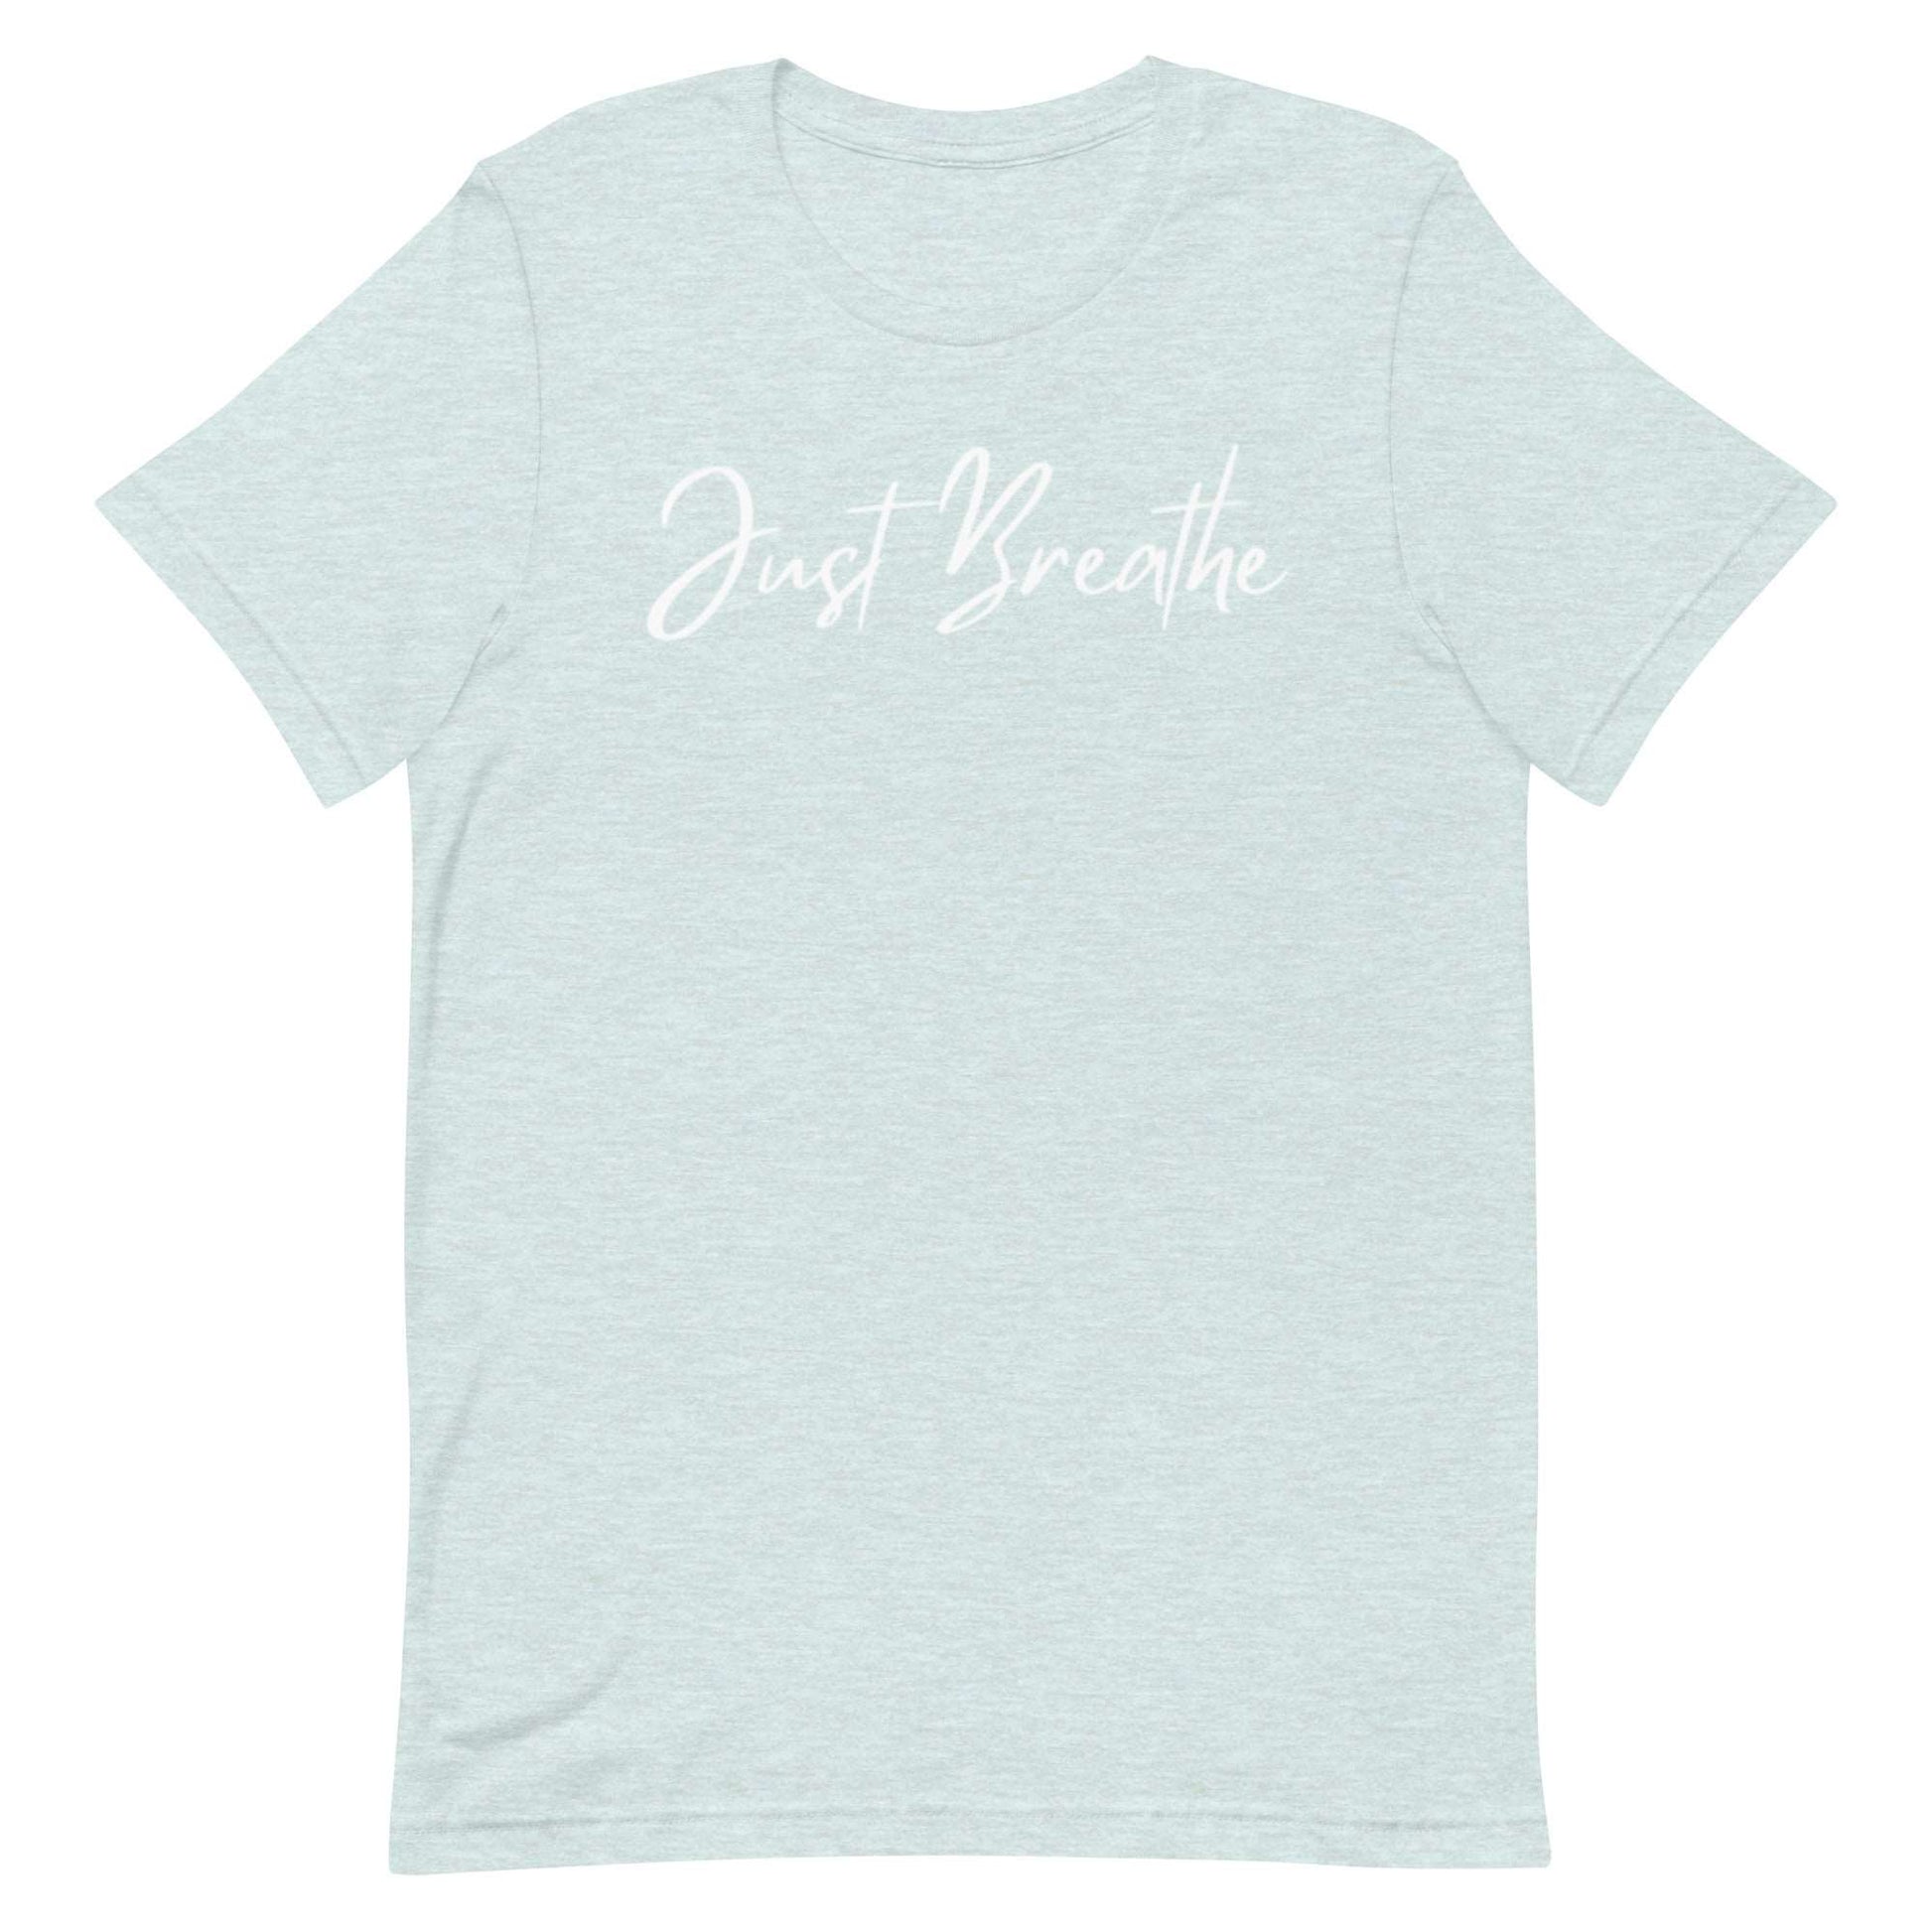 Just Breathe. Unisex T-shirt